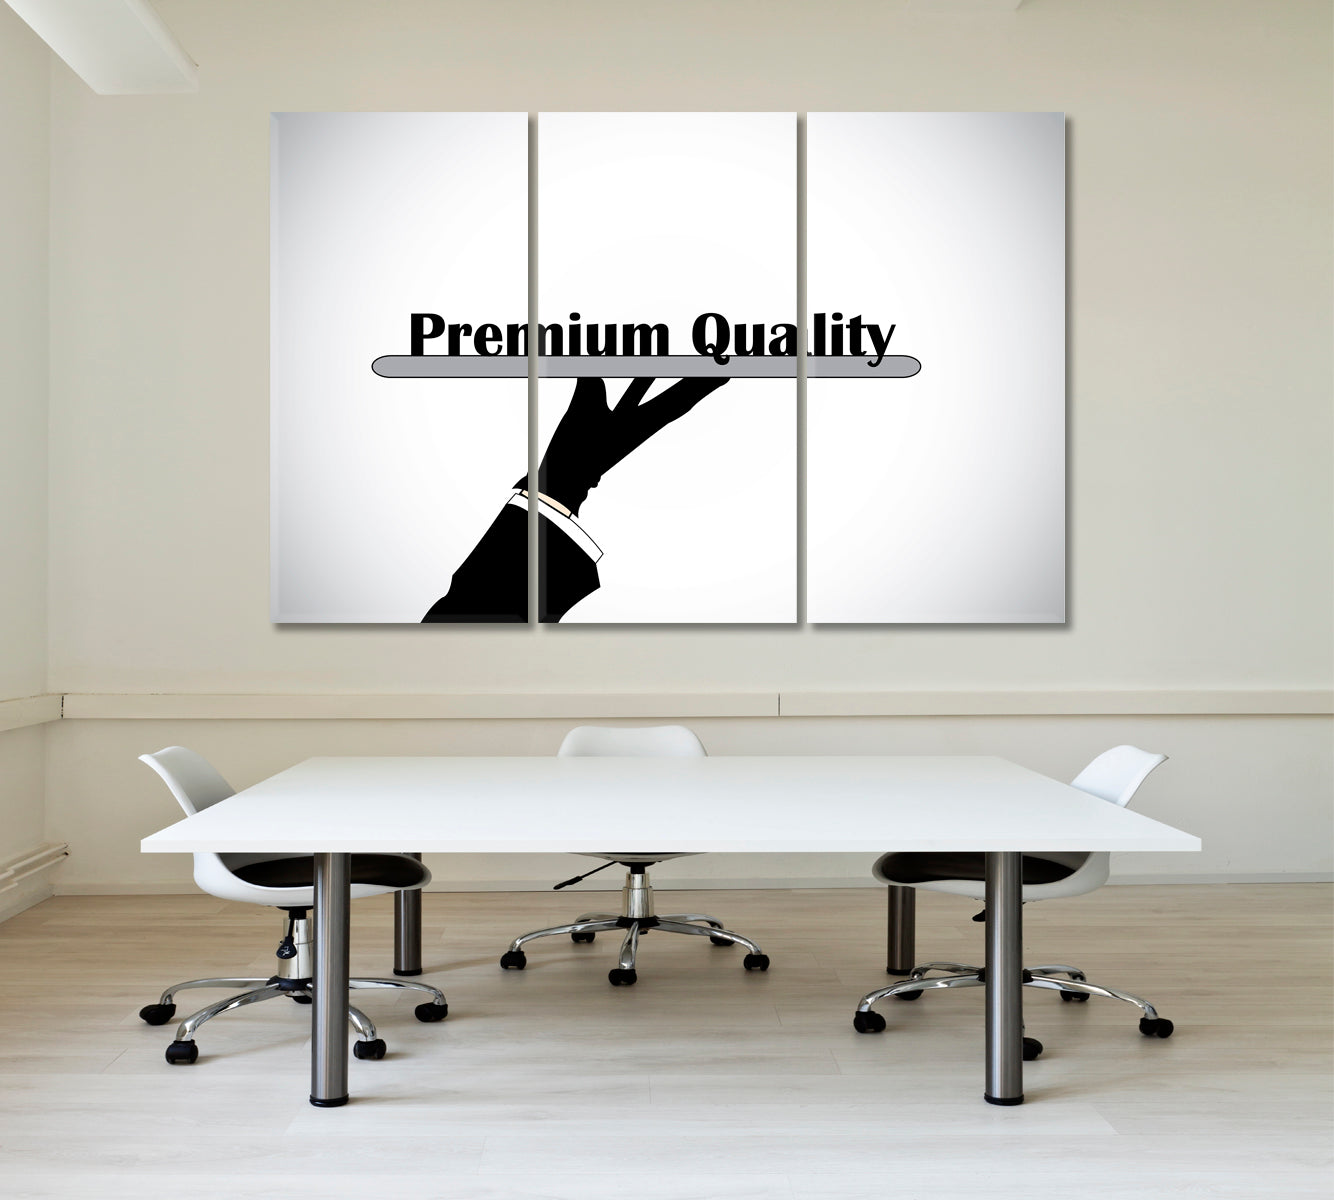 PREMIUM QUALITY Professional Hand Business Concept Business Concept Wall Art Artesty 3 panels 36" x 24" 